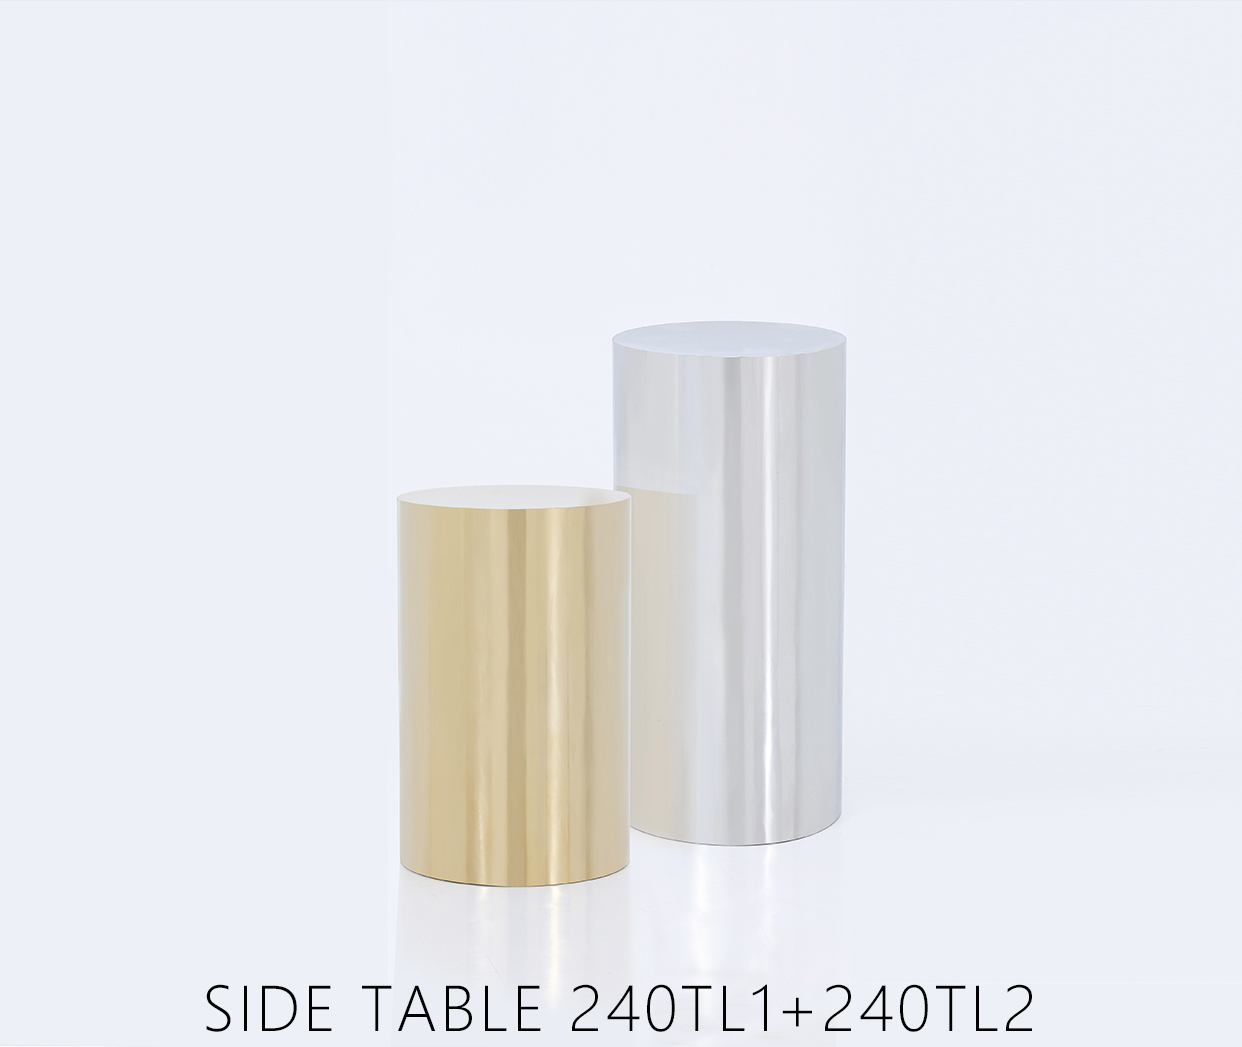 SIDE TABLE 240TL1 +240TL2